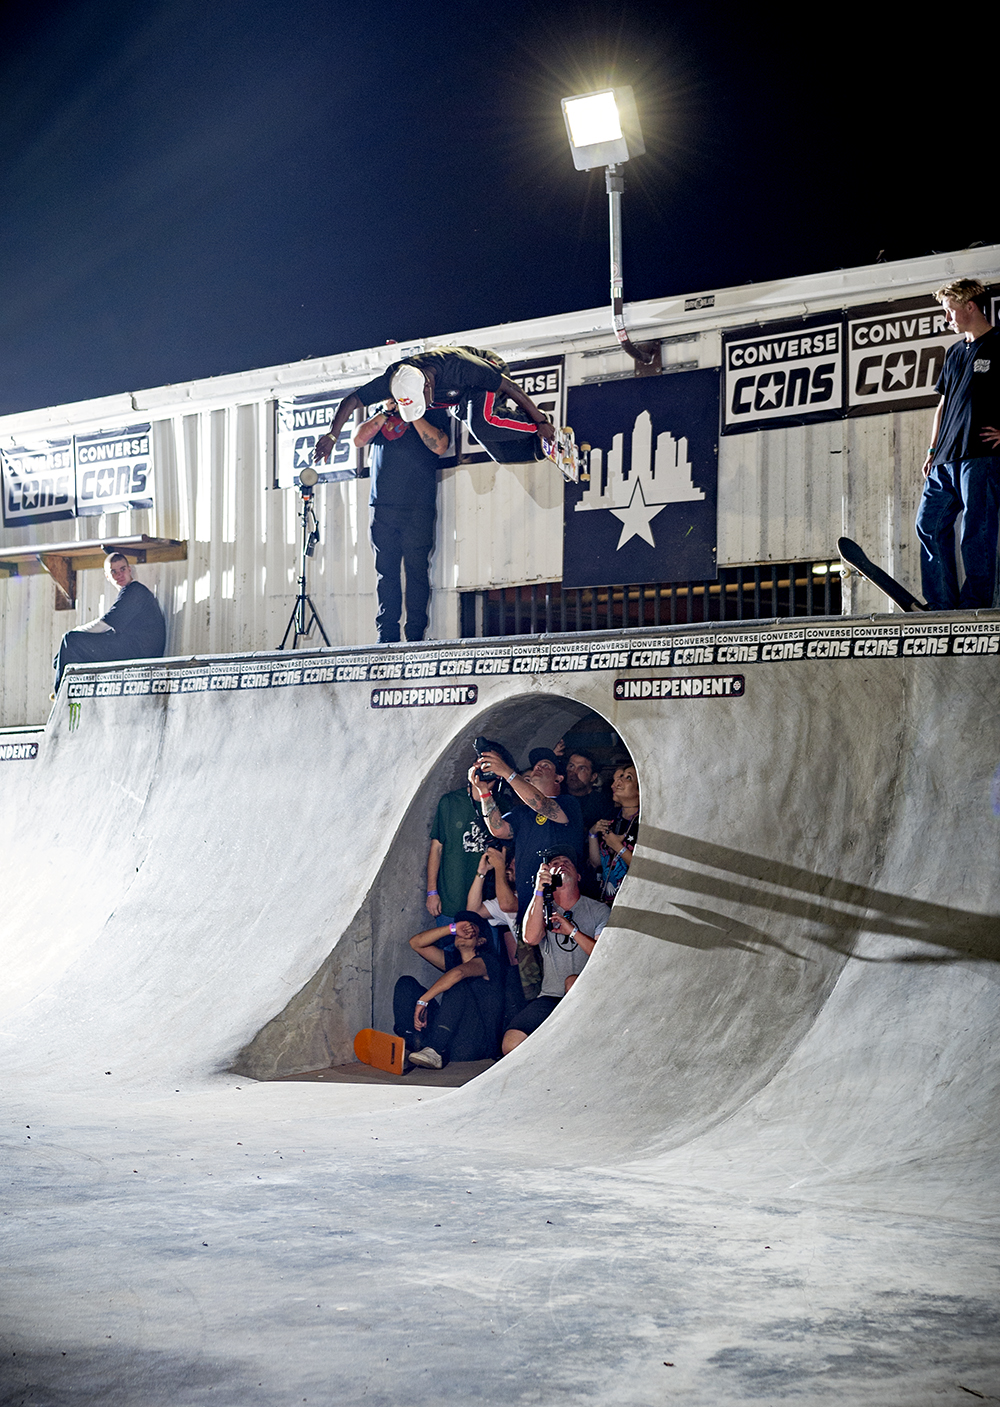 Tampa Pro 2019 Converse Concrete Jam | Skatepark of Tampa Photo